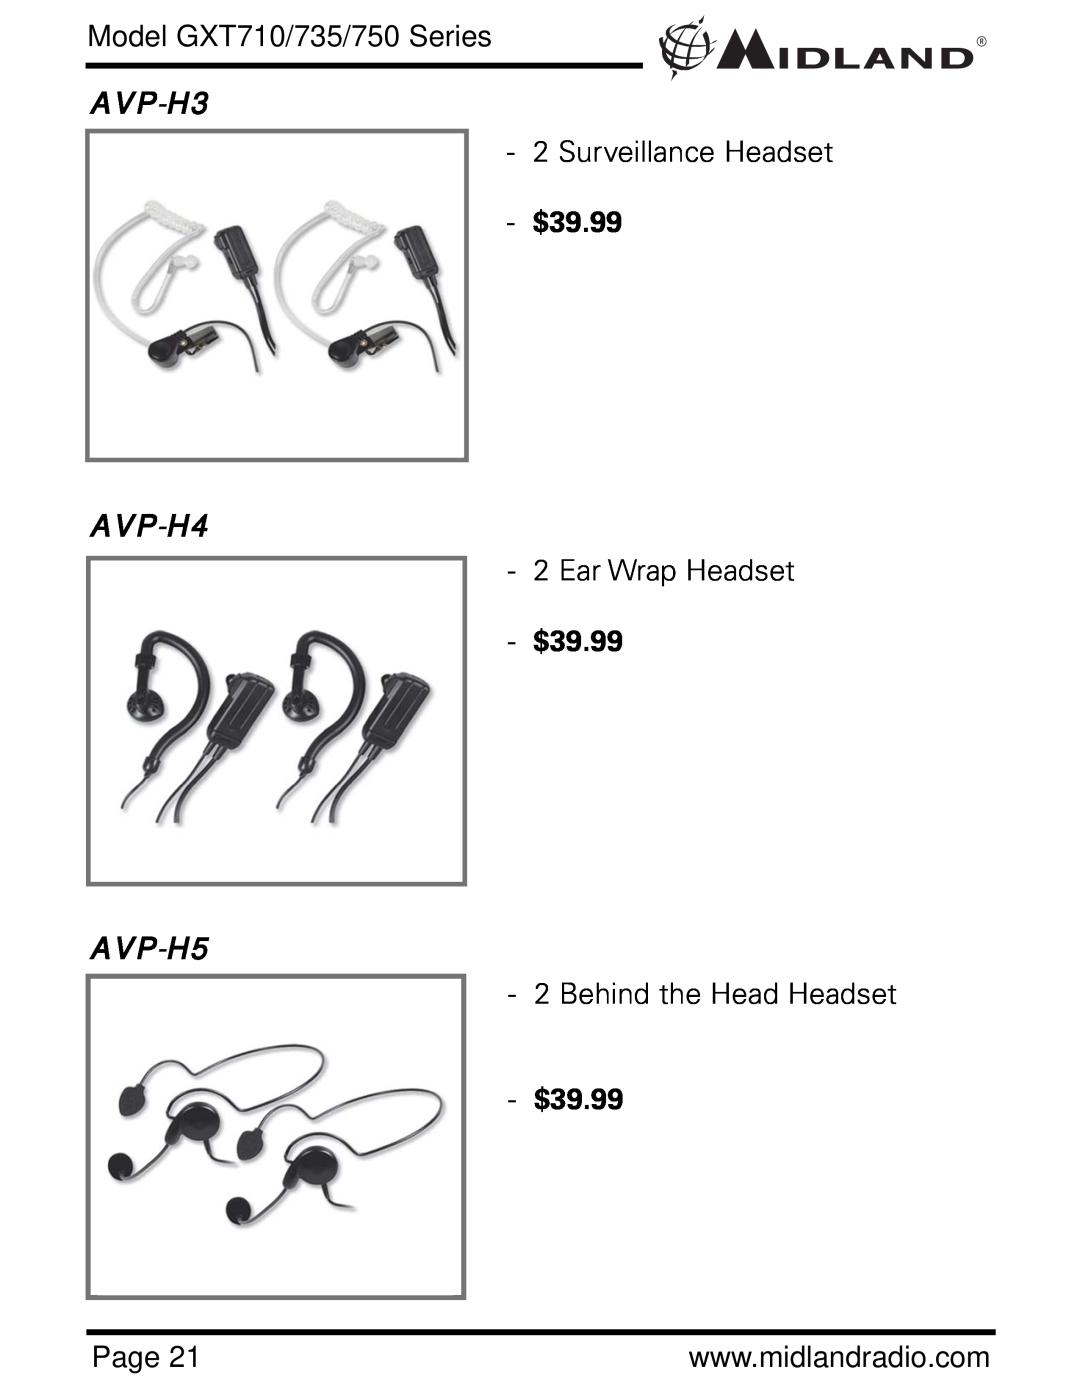 Midland Radio GXT735 Series AVP-H3, AVP-H4, AVP-H5, Model GXT710/735/750 Series, Surveillance Headset, Ear Wrap Headset 